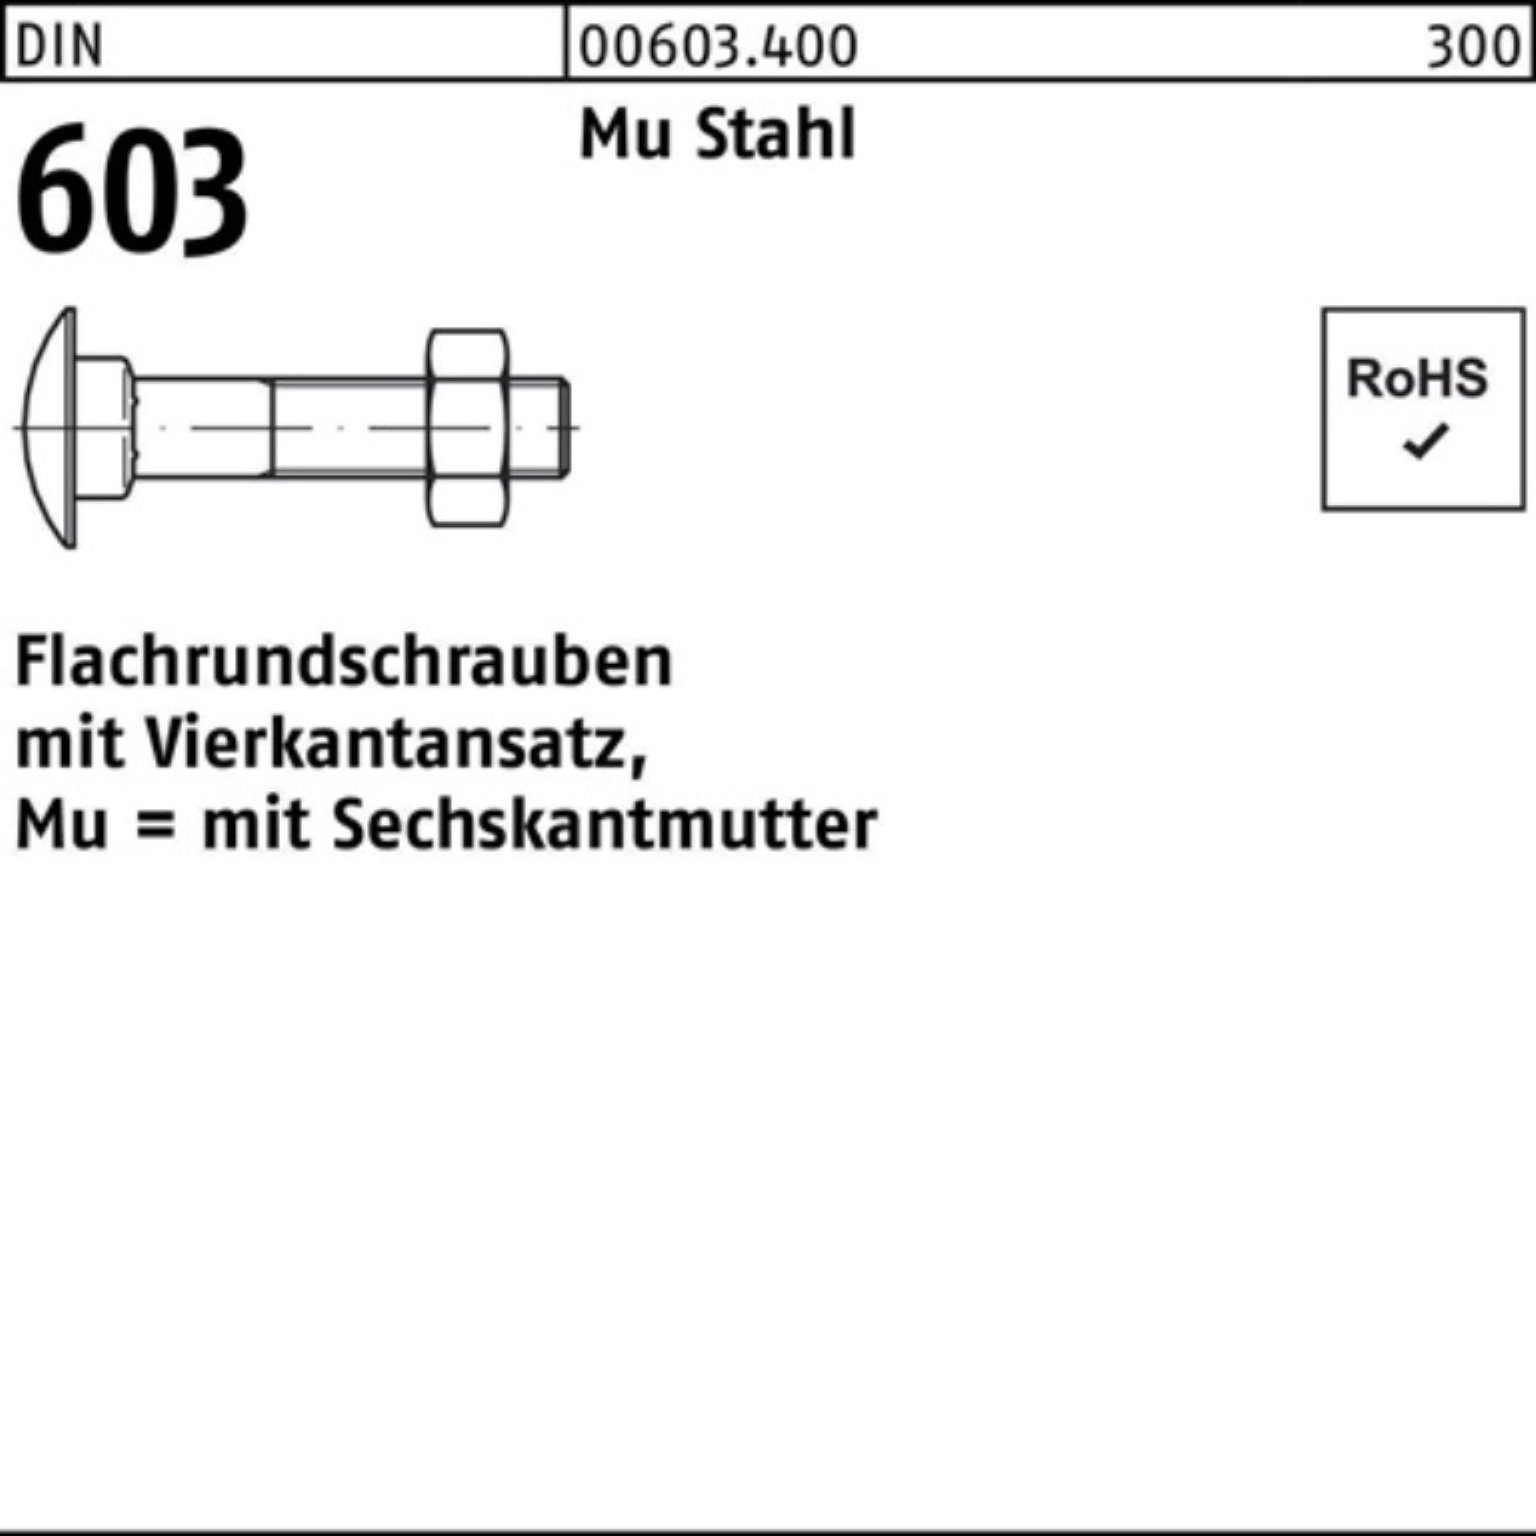 Vierkantansatz/6-ktmutter DIN Pack Schraube Reyher M12x90 603 100er Flachrundschraube